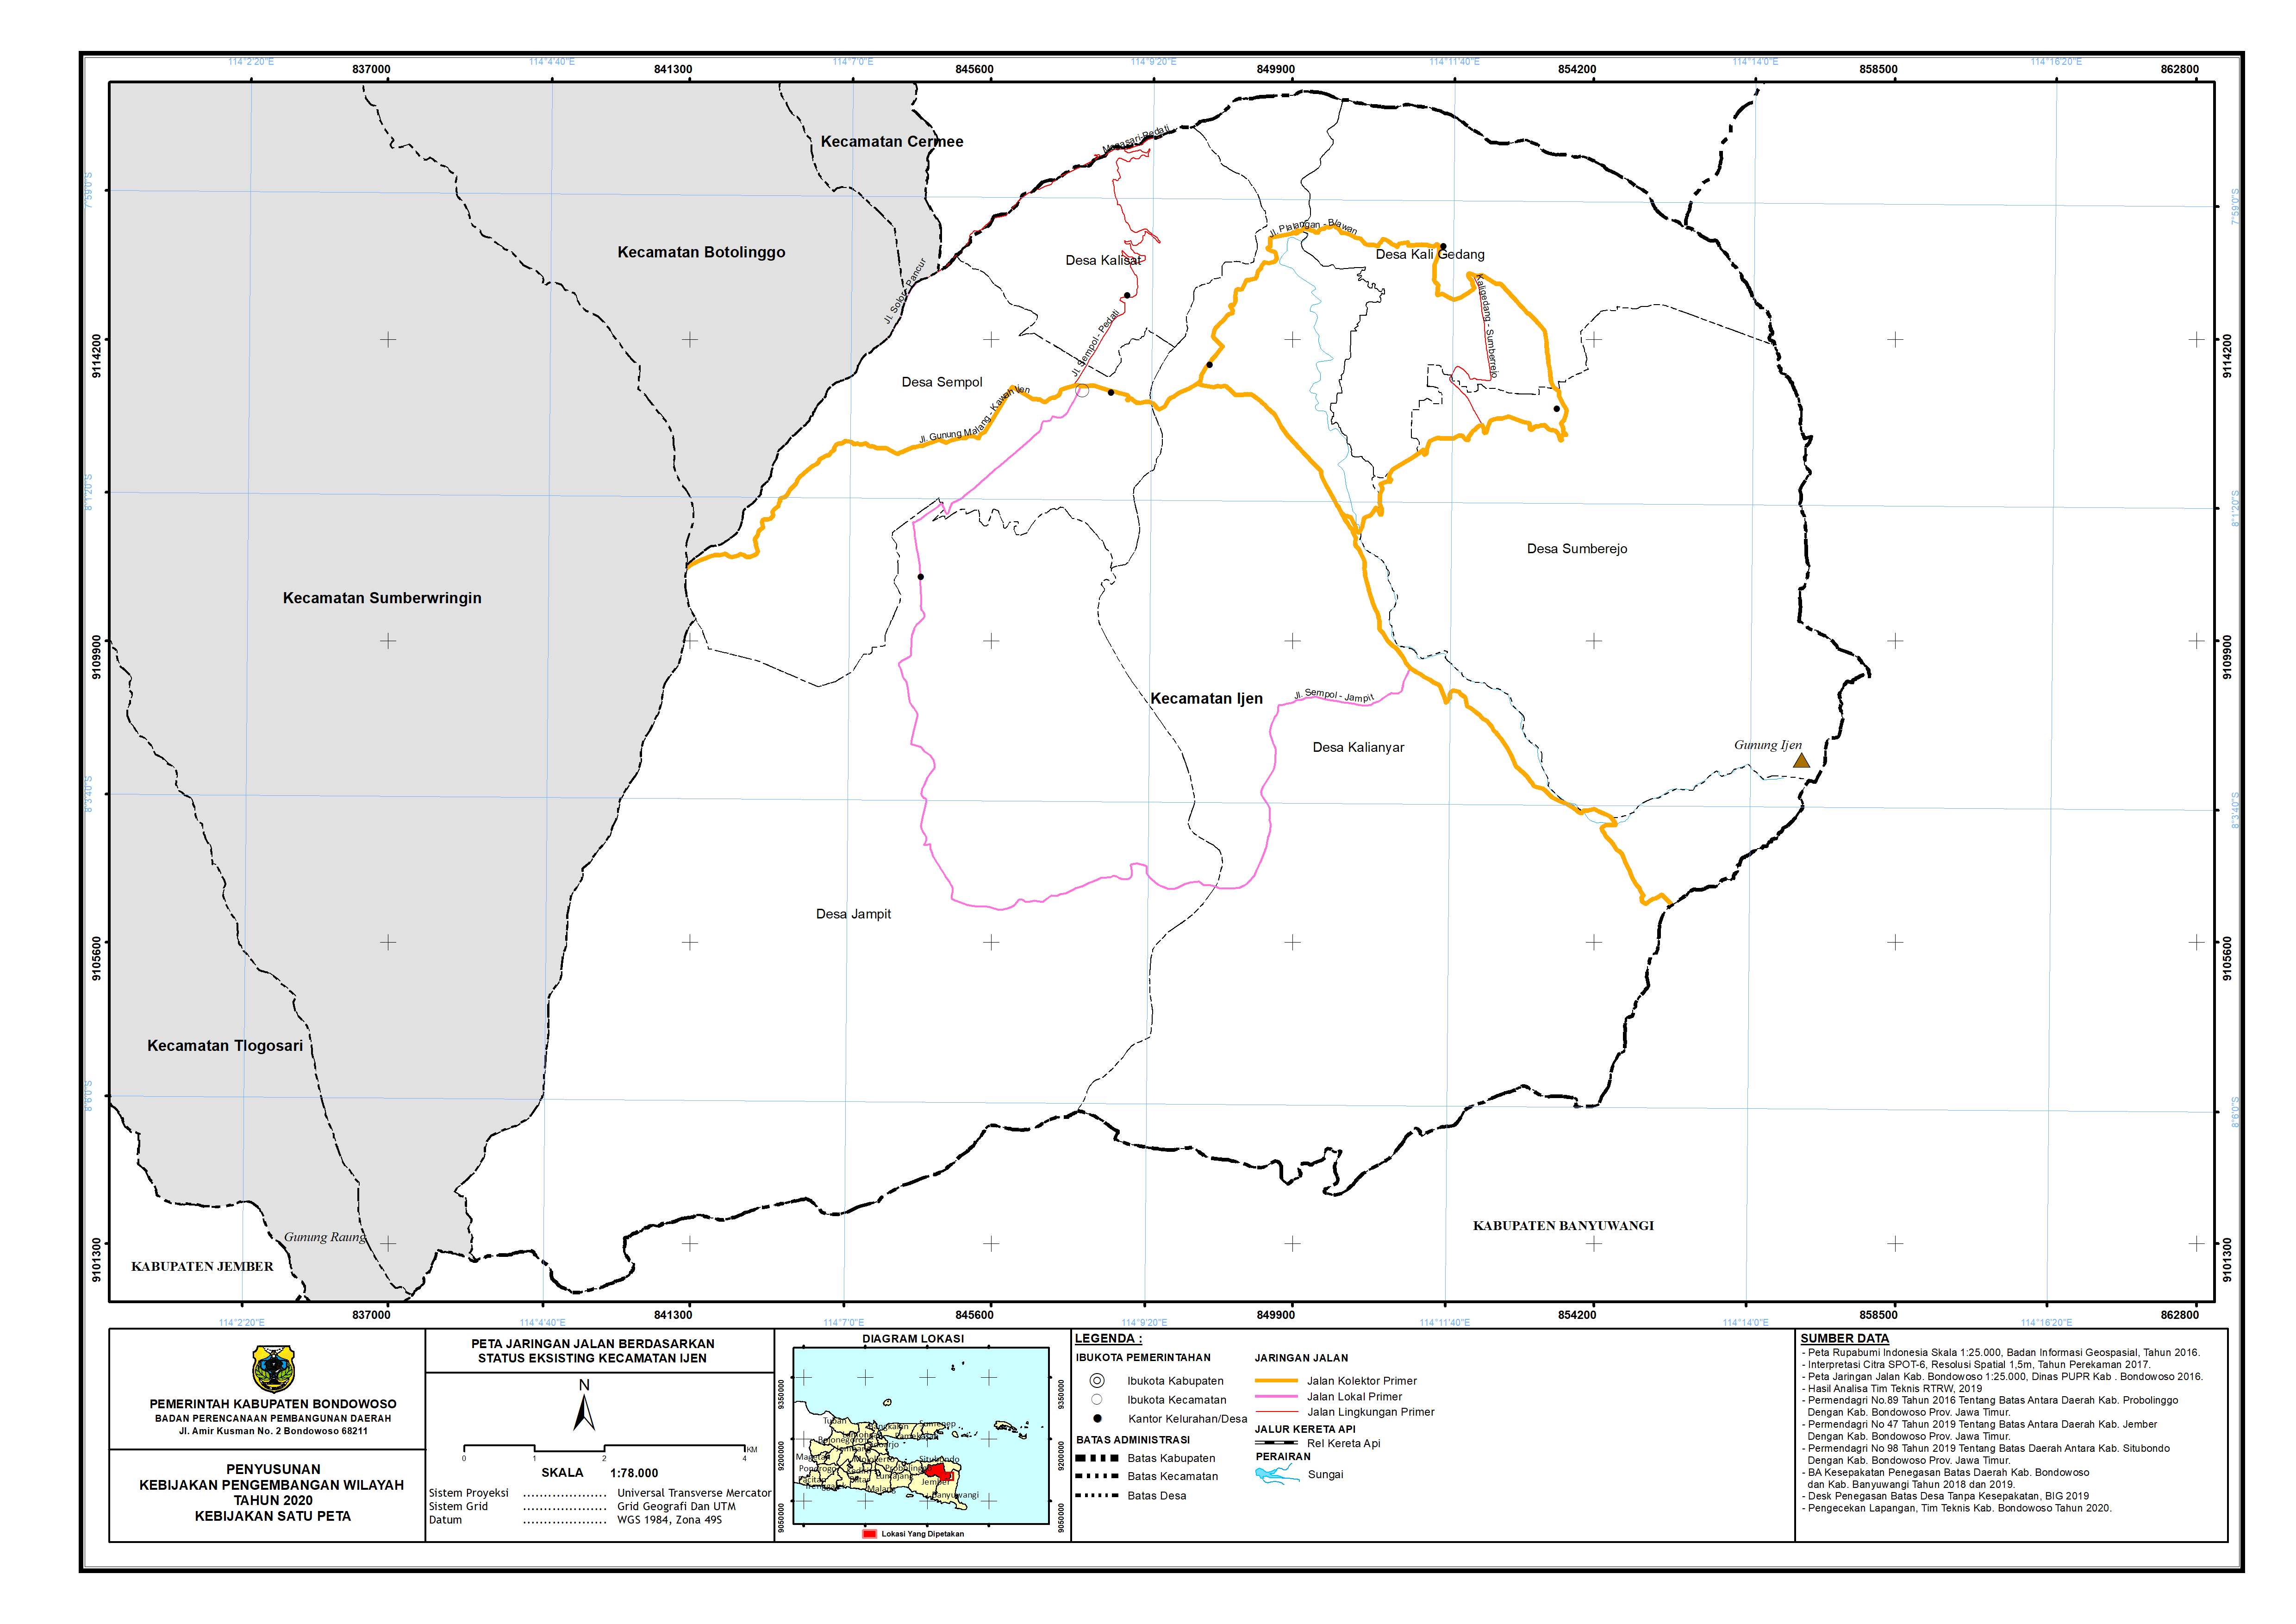 Peta Jaringan Jalan Berdasarkan Status Eksisting Kecamatan Ijen.png